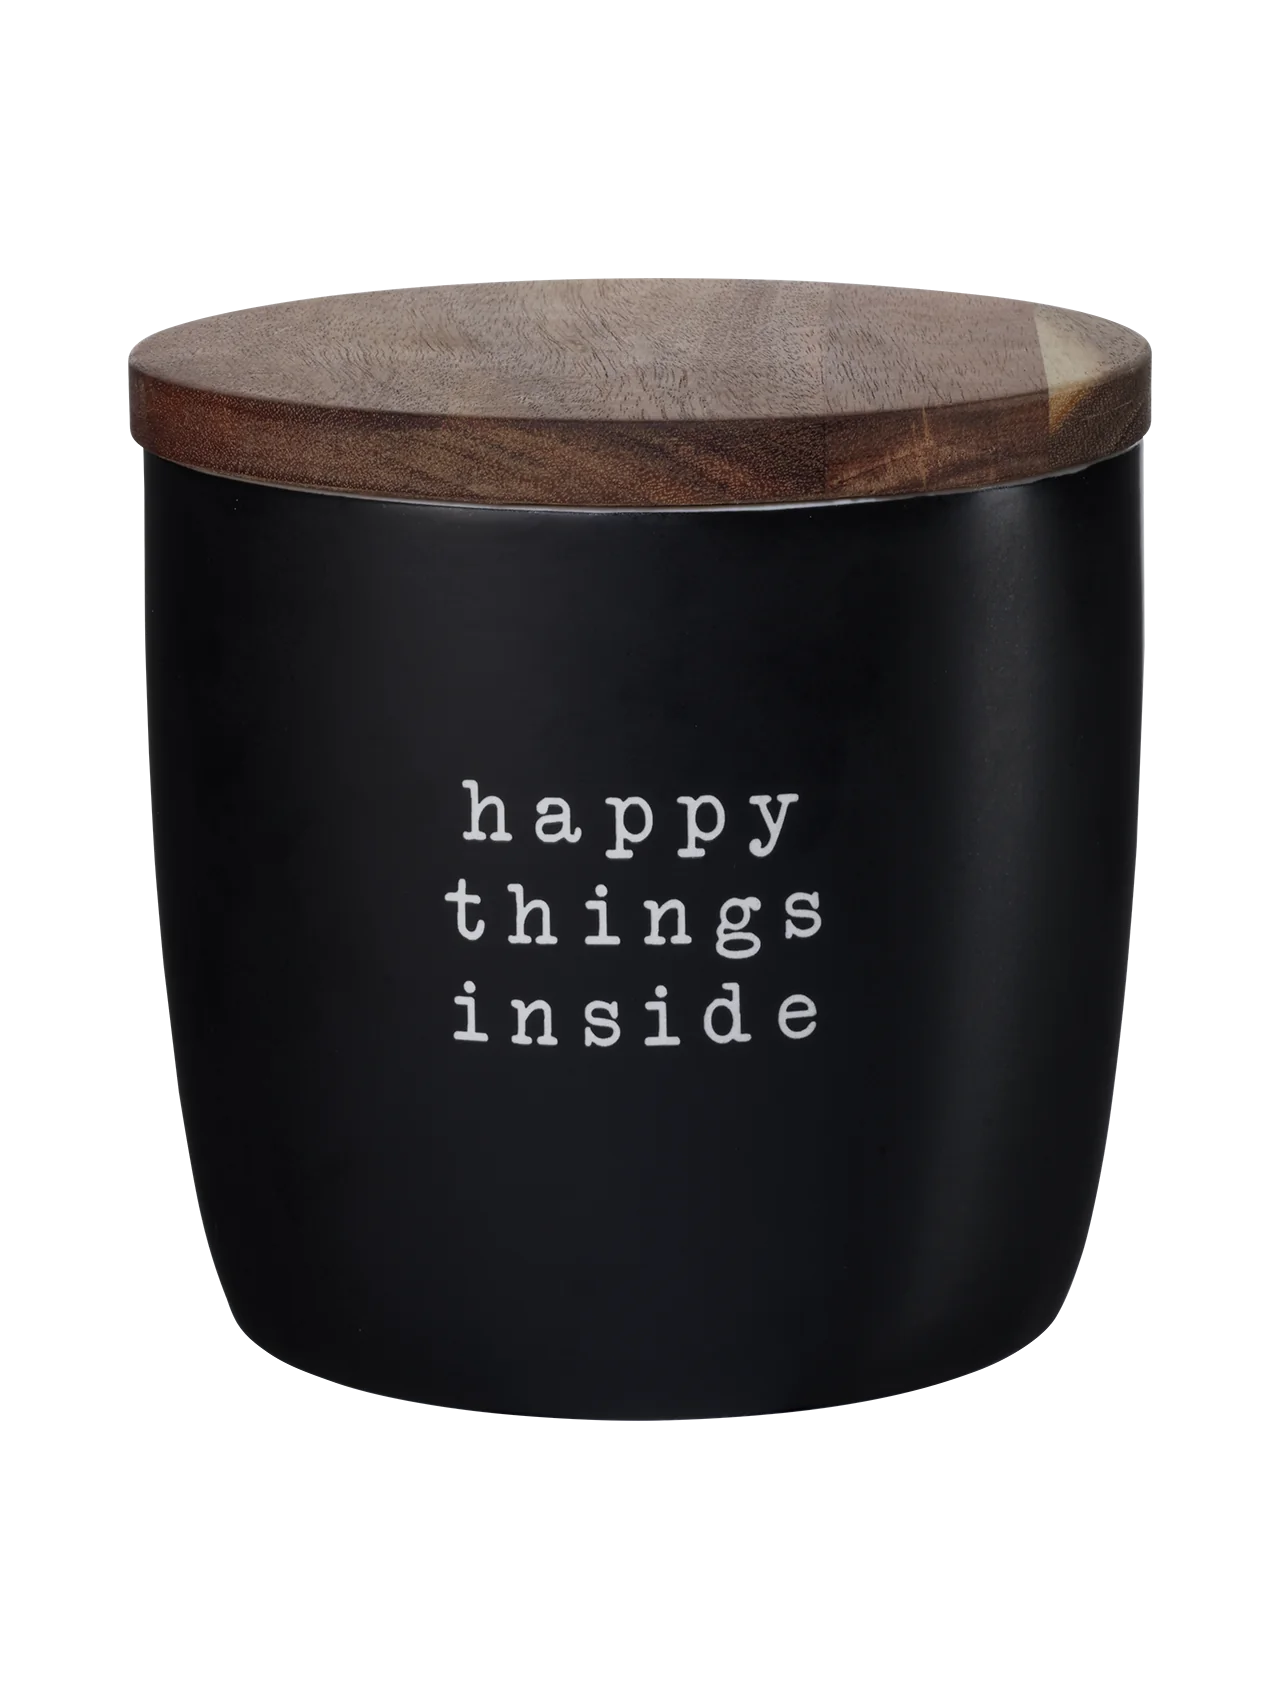 Keks Dose schwarz HAPPY THINGS INSIDE 14,5 cm hoch Vorratsdose aus Keramik m. Akazienholzdeckel 